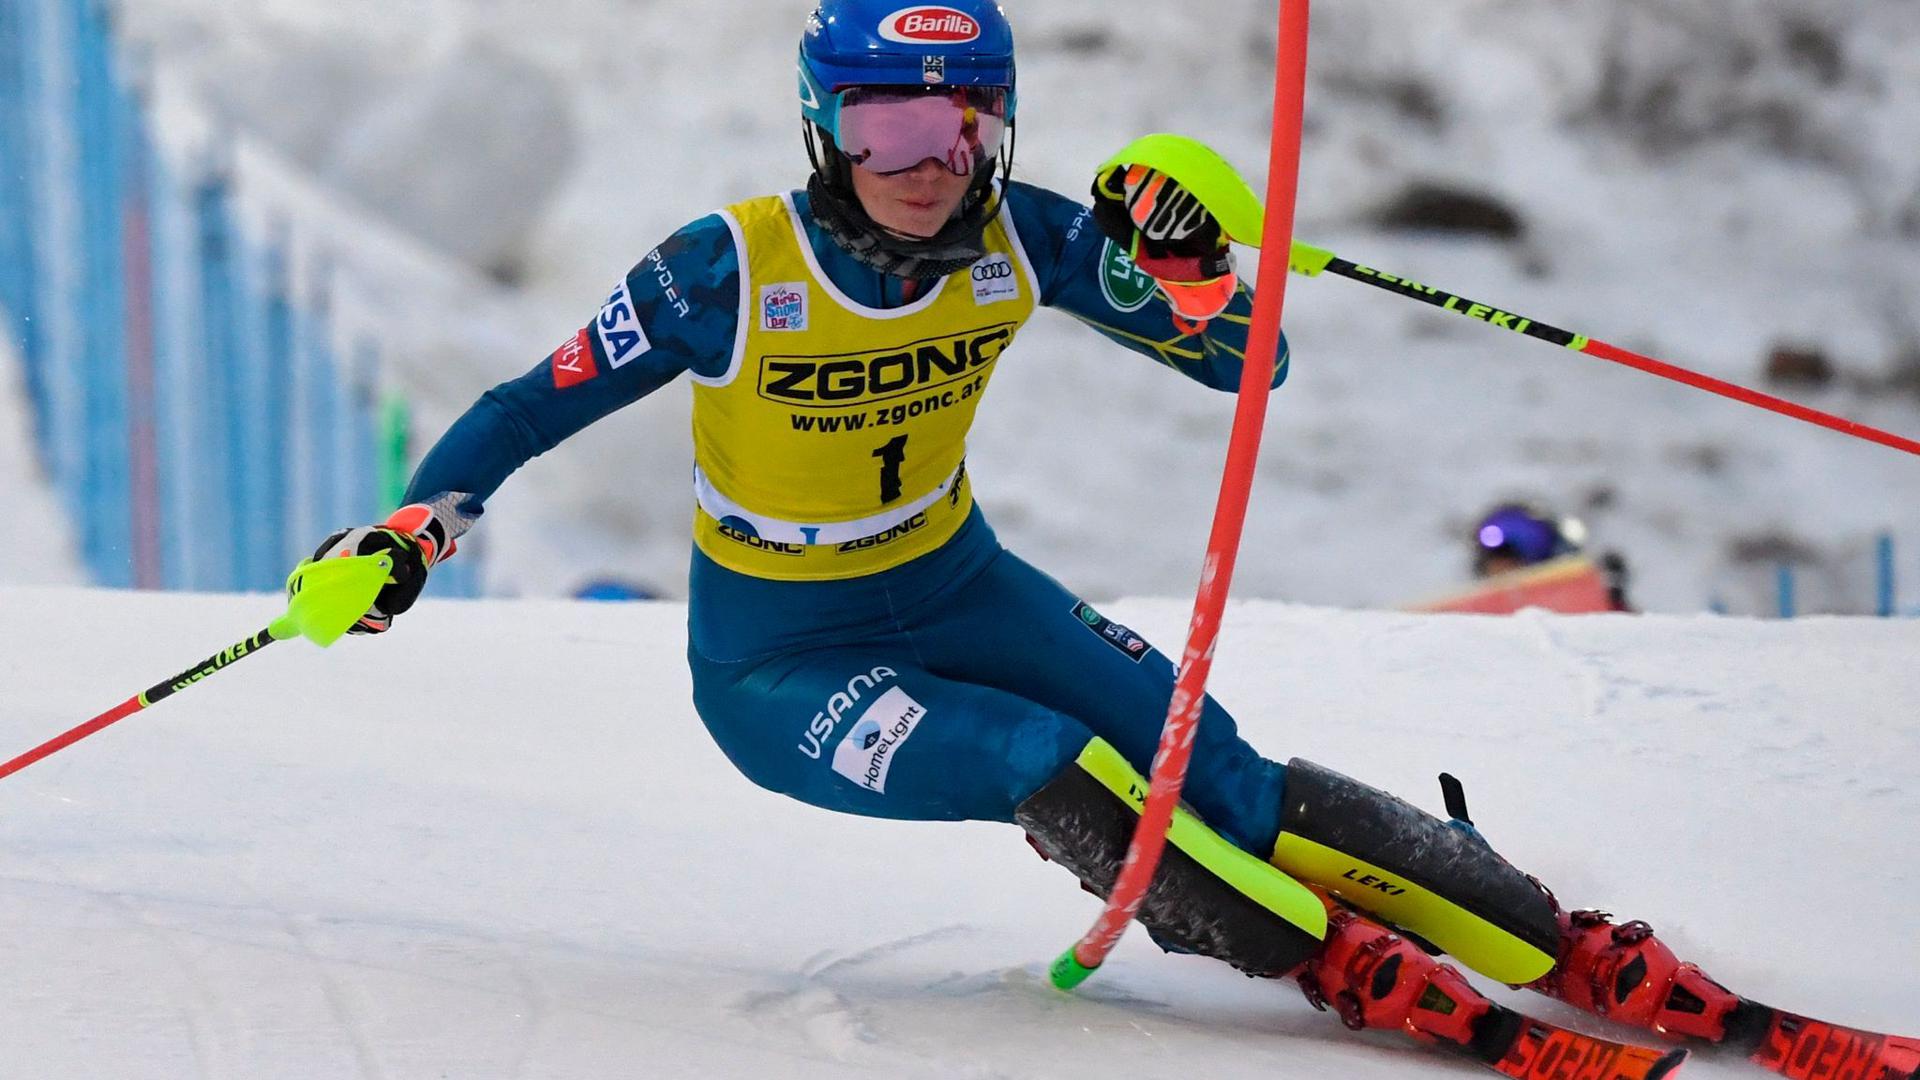 Zweite beim Slalom in Levi: Mikaela Shiffrin.